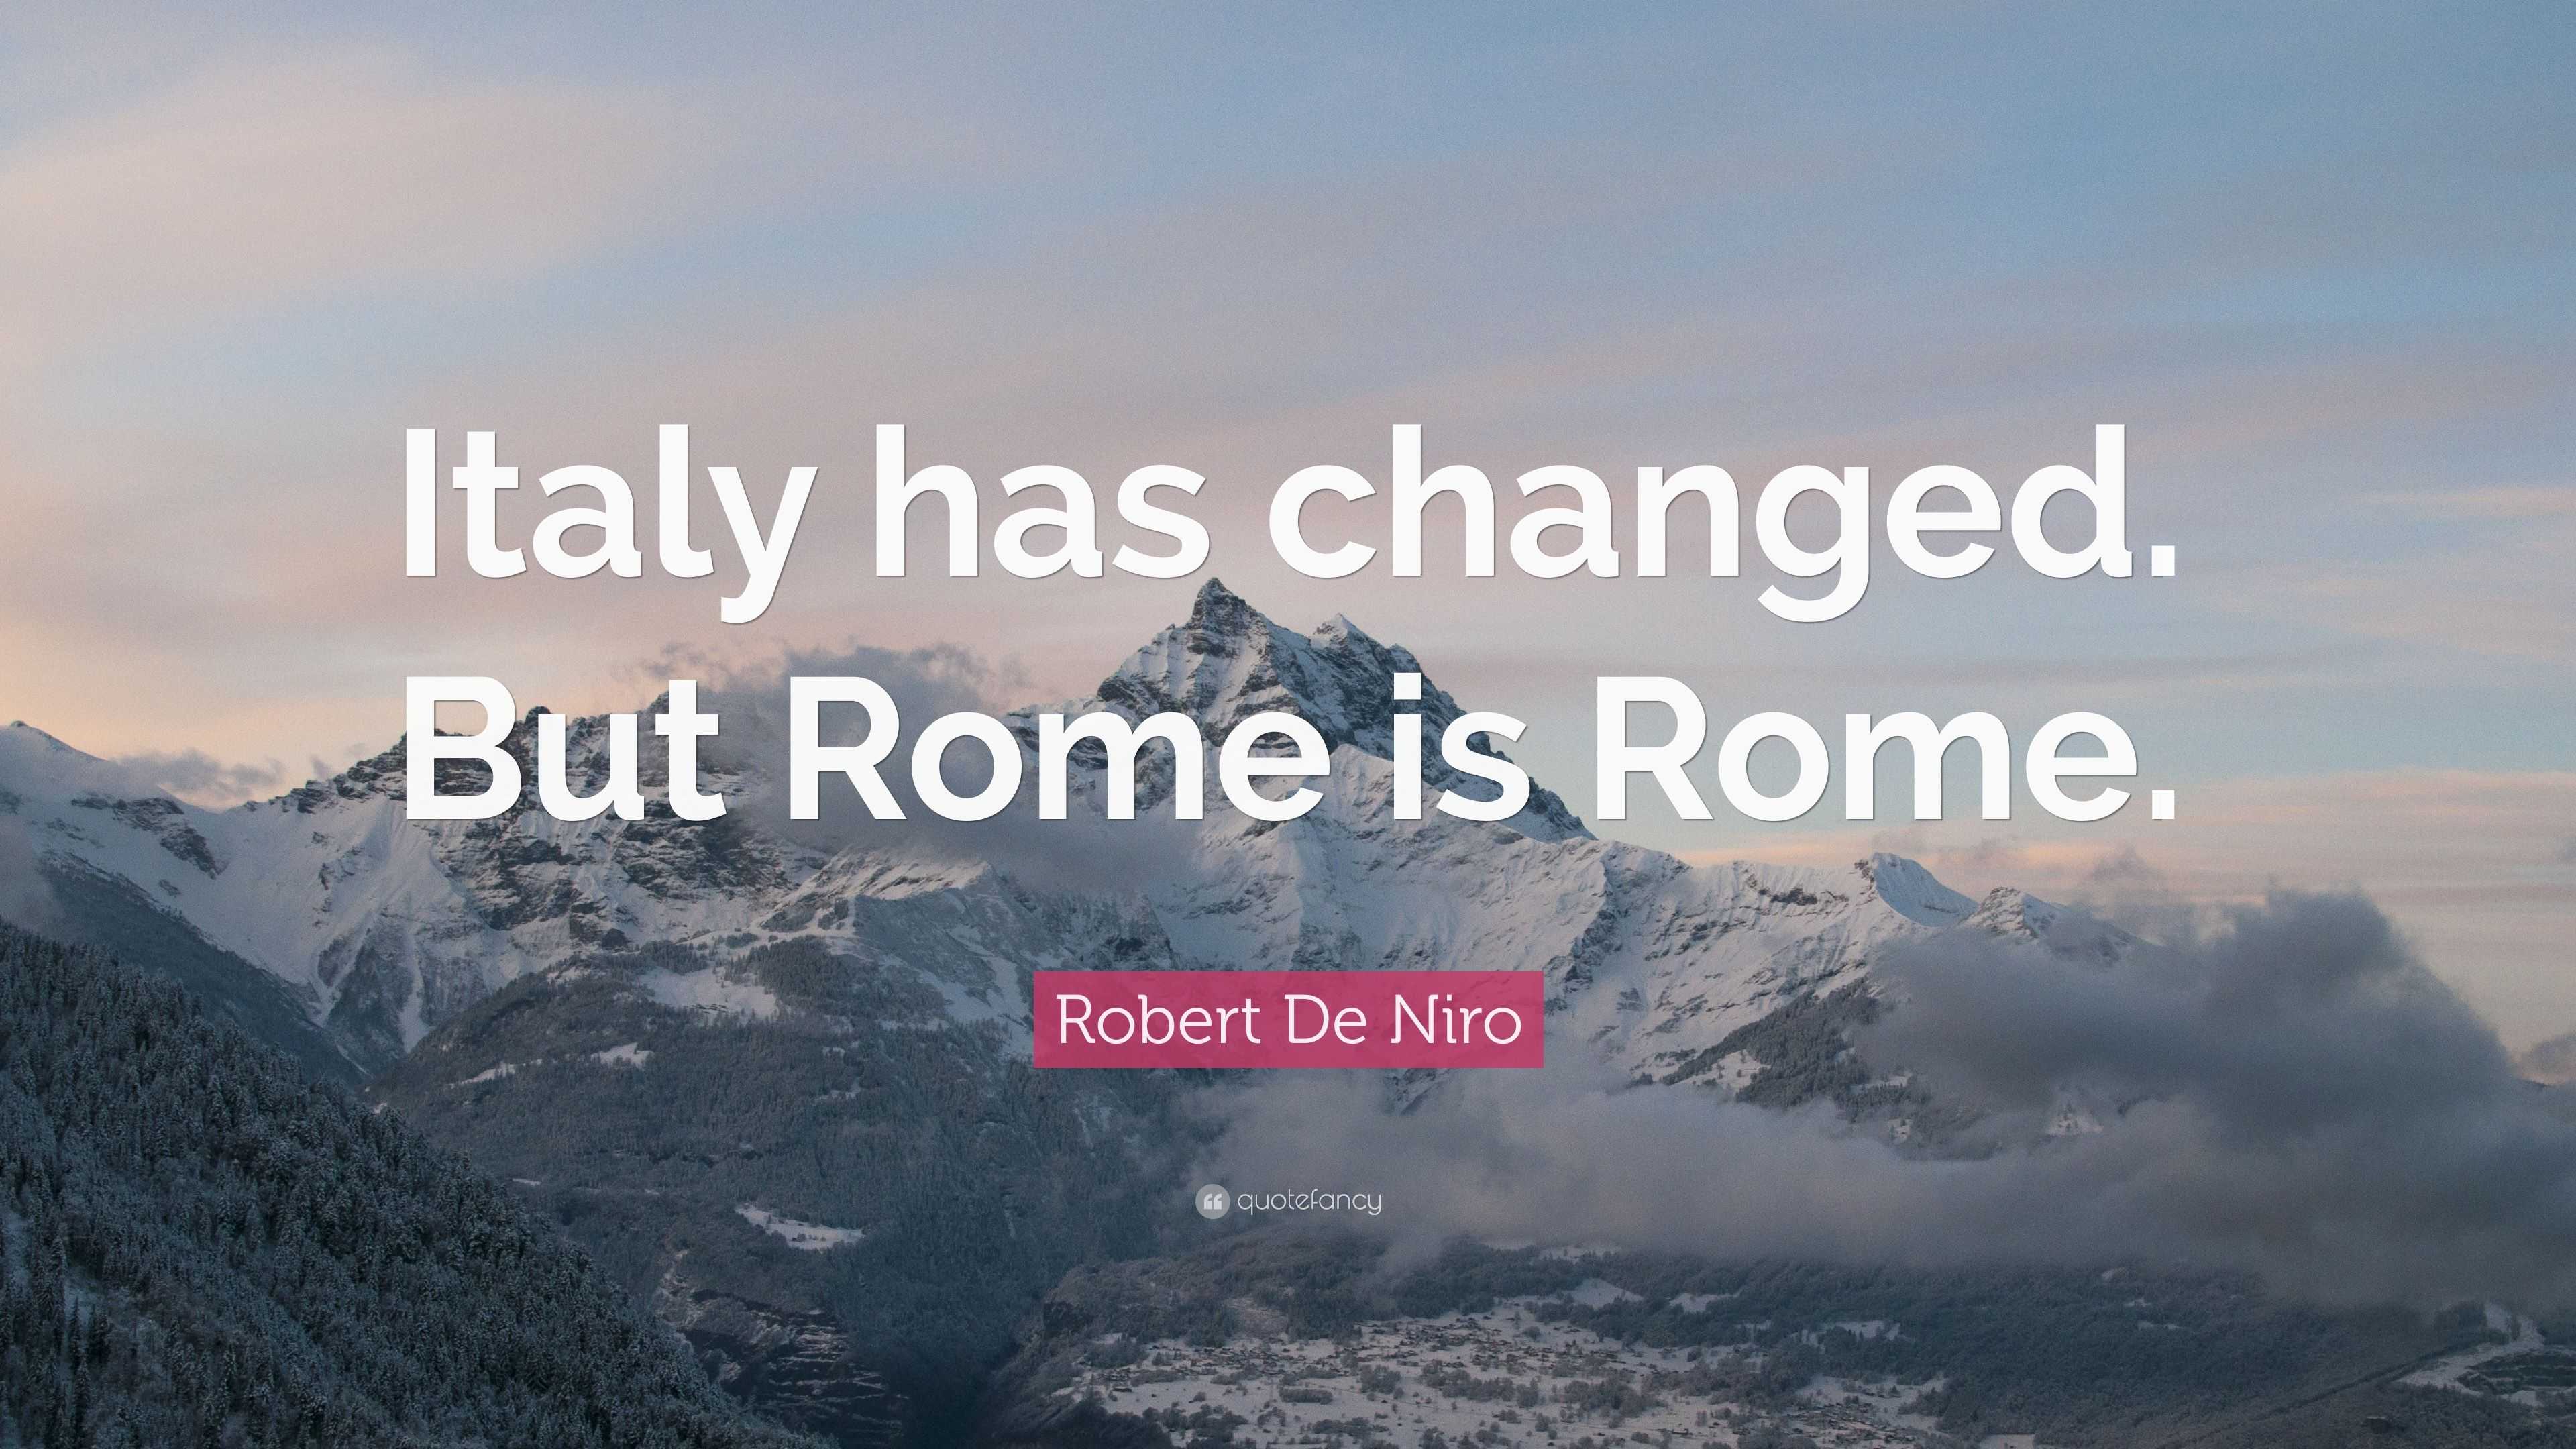 Robert De Niro Quote: "Italy has changed. But Rome is Rome." (7 wallpapers) - Quotefancy